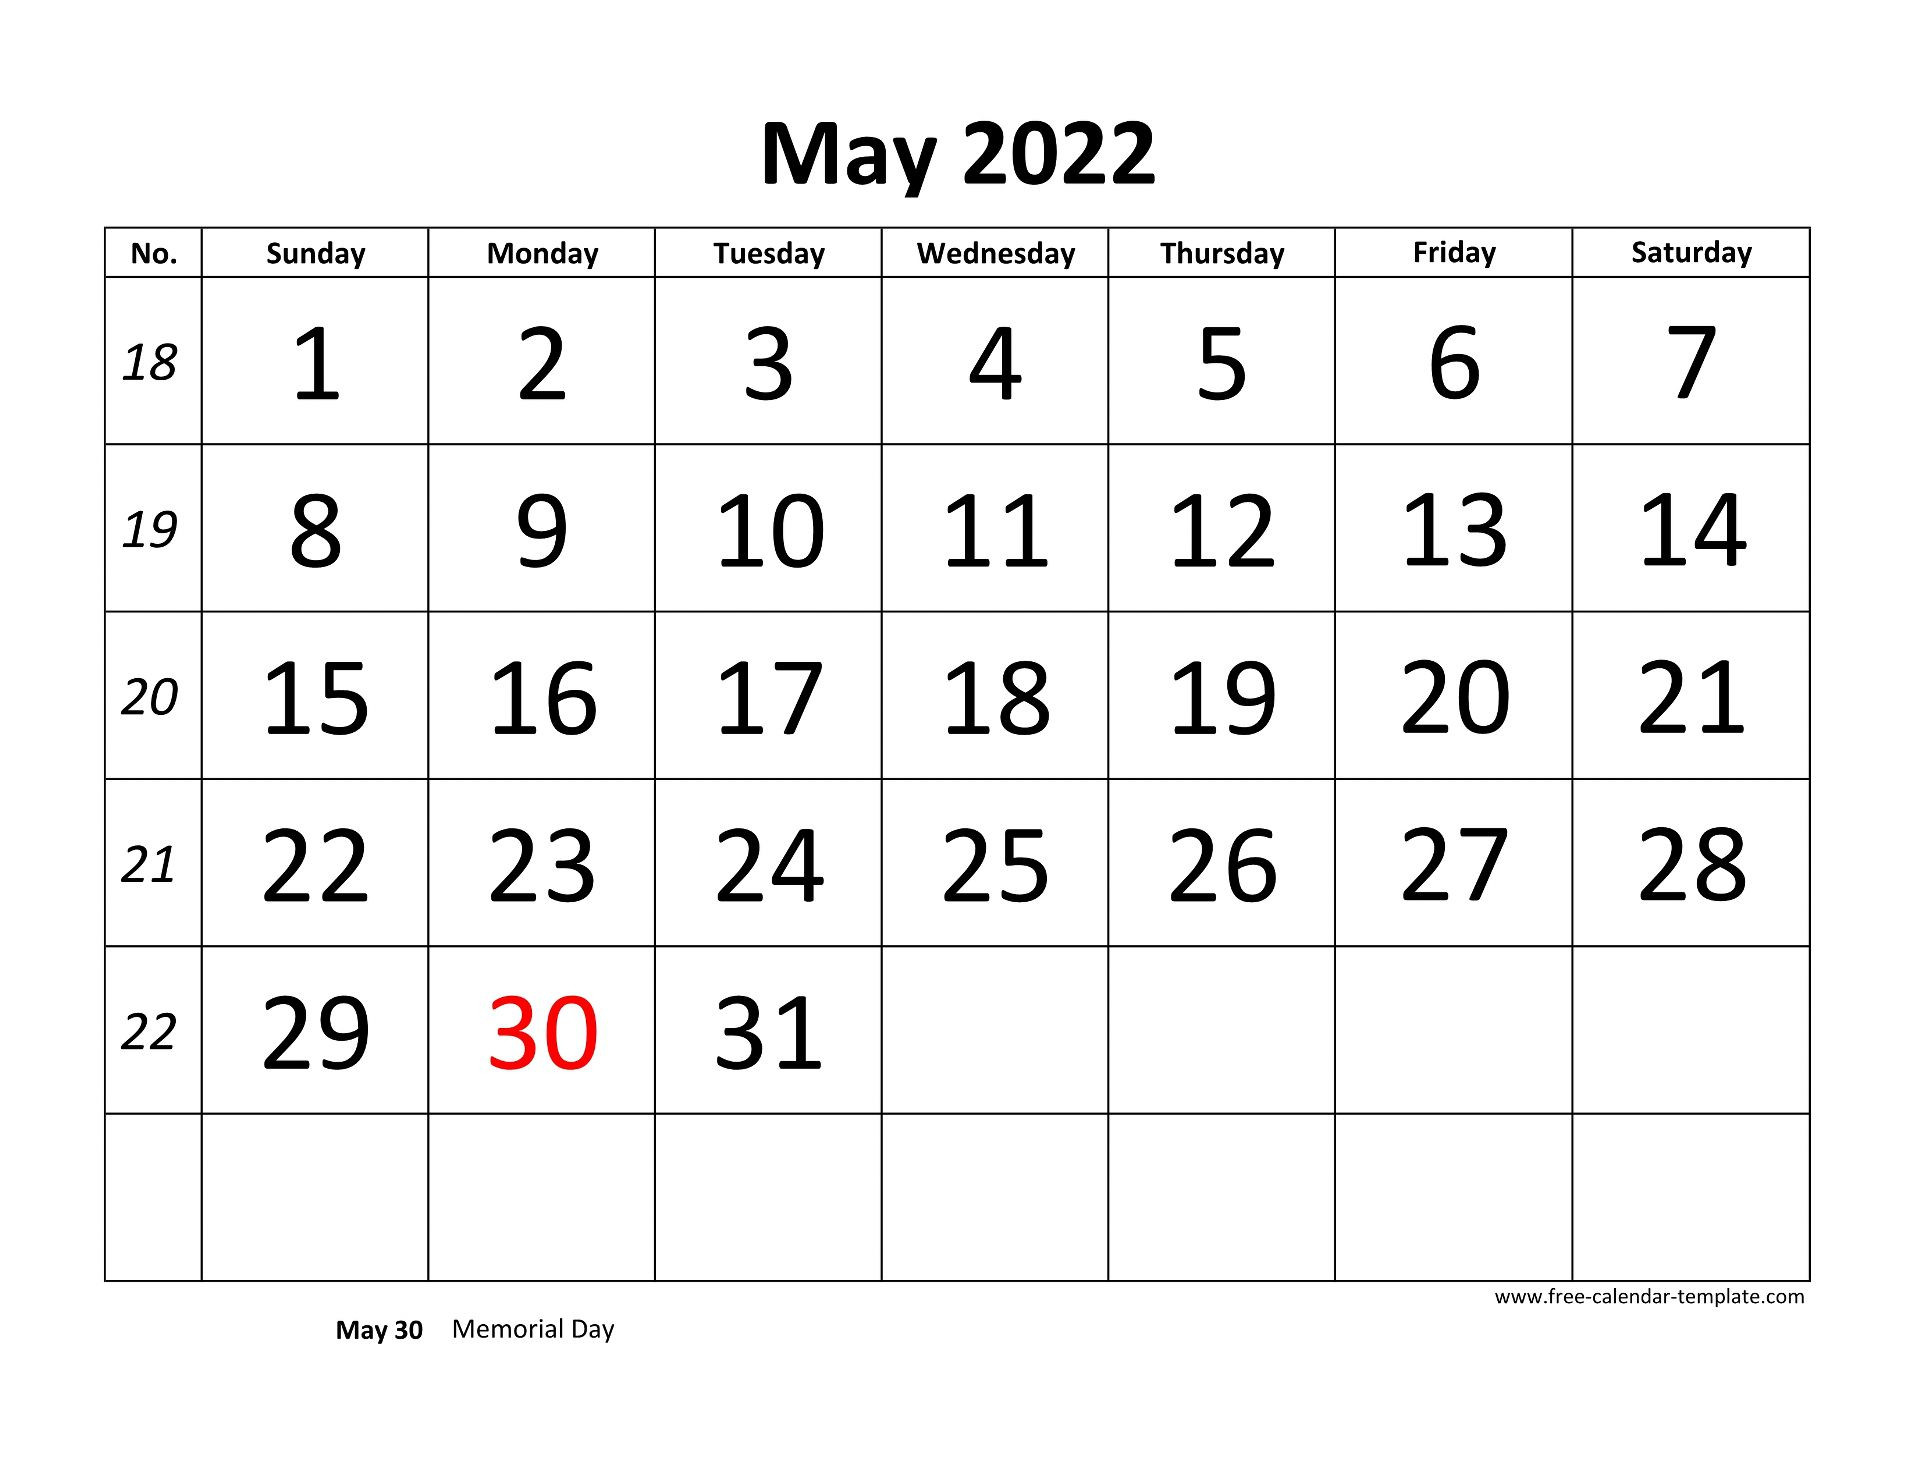 May 2022 Free Calendar Tempplate | Free-Calendar-Template  May Calendar For 2022